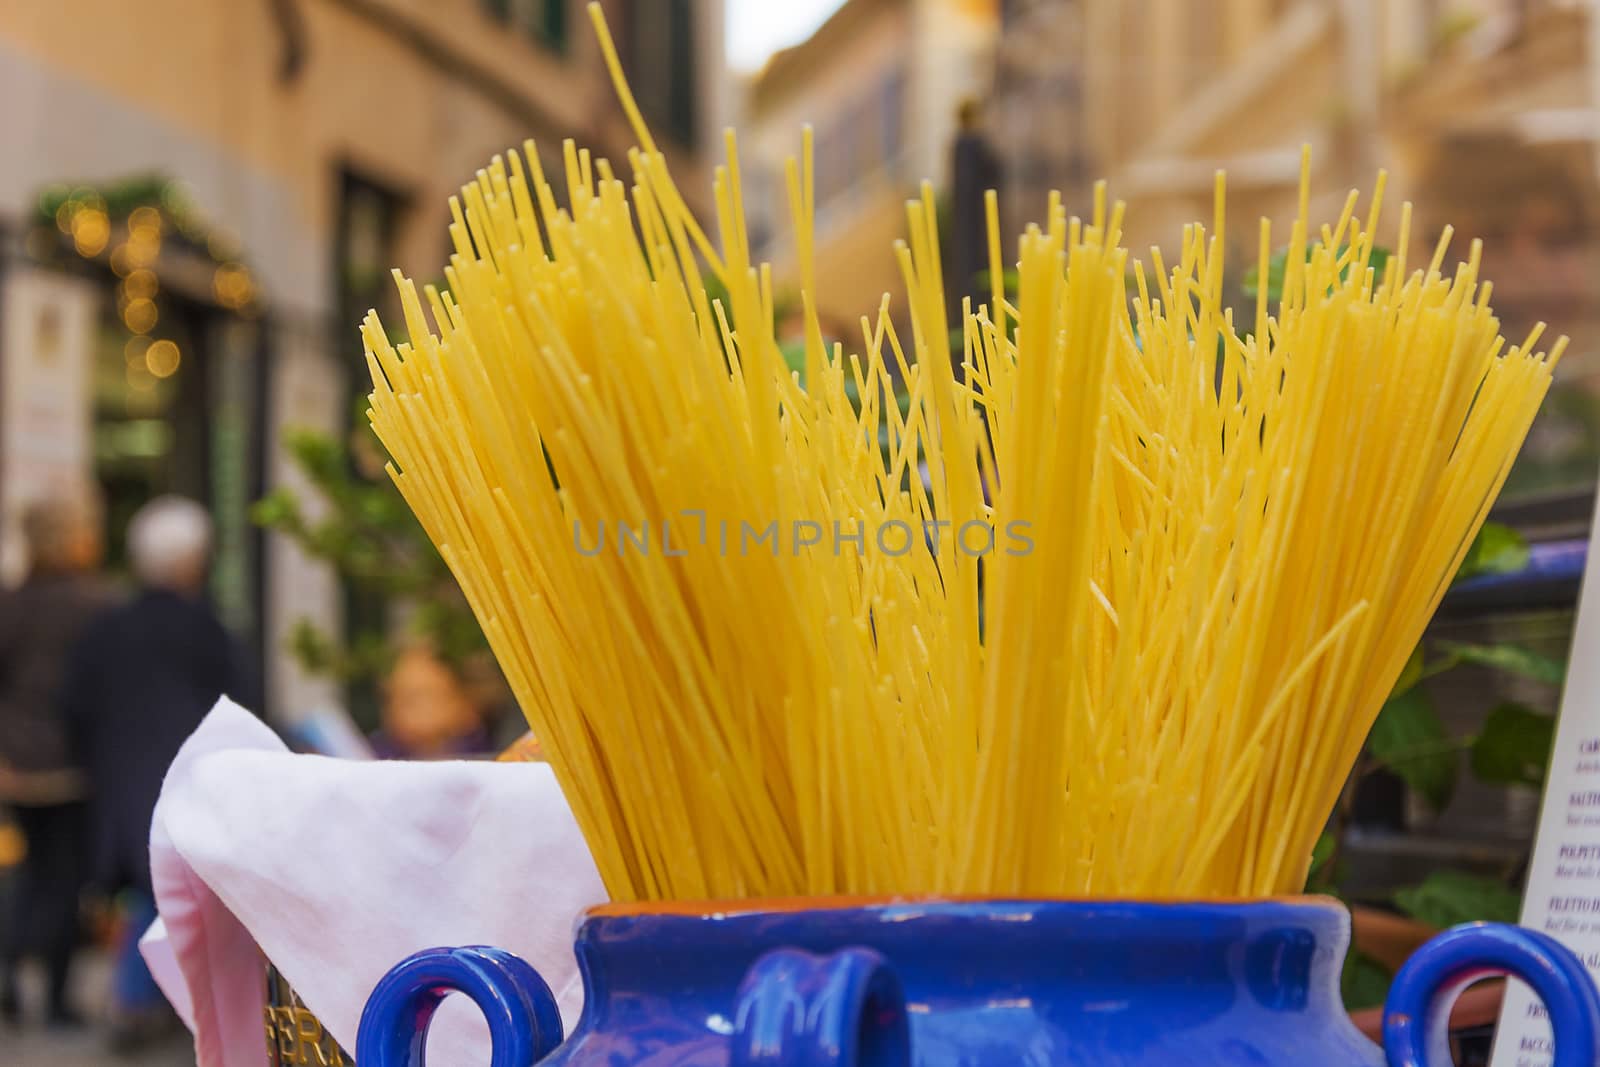 Italian spaghetti in a jar by rarrarorro